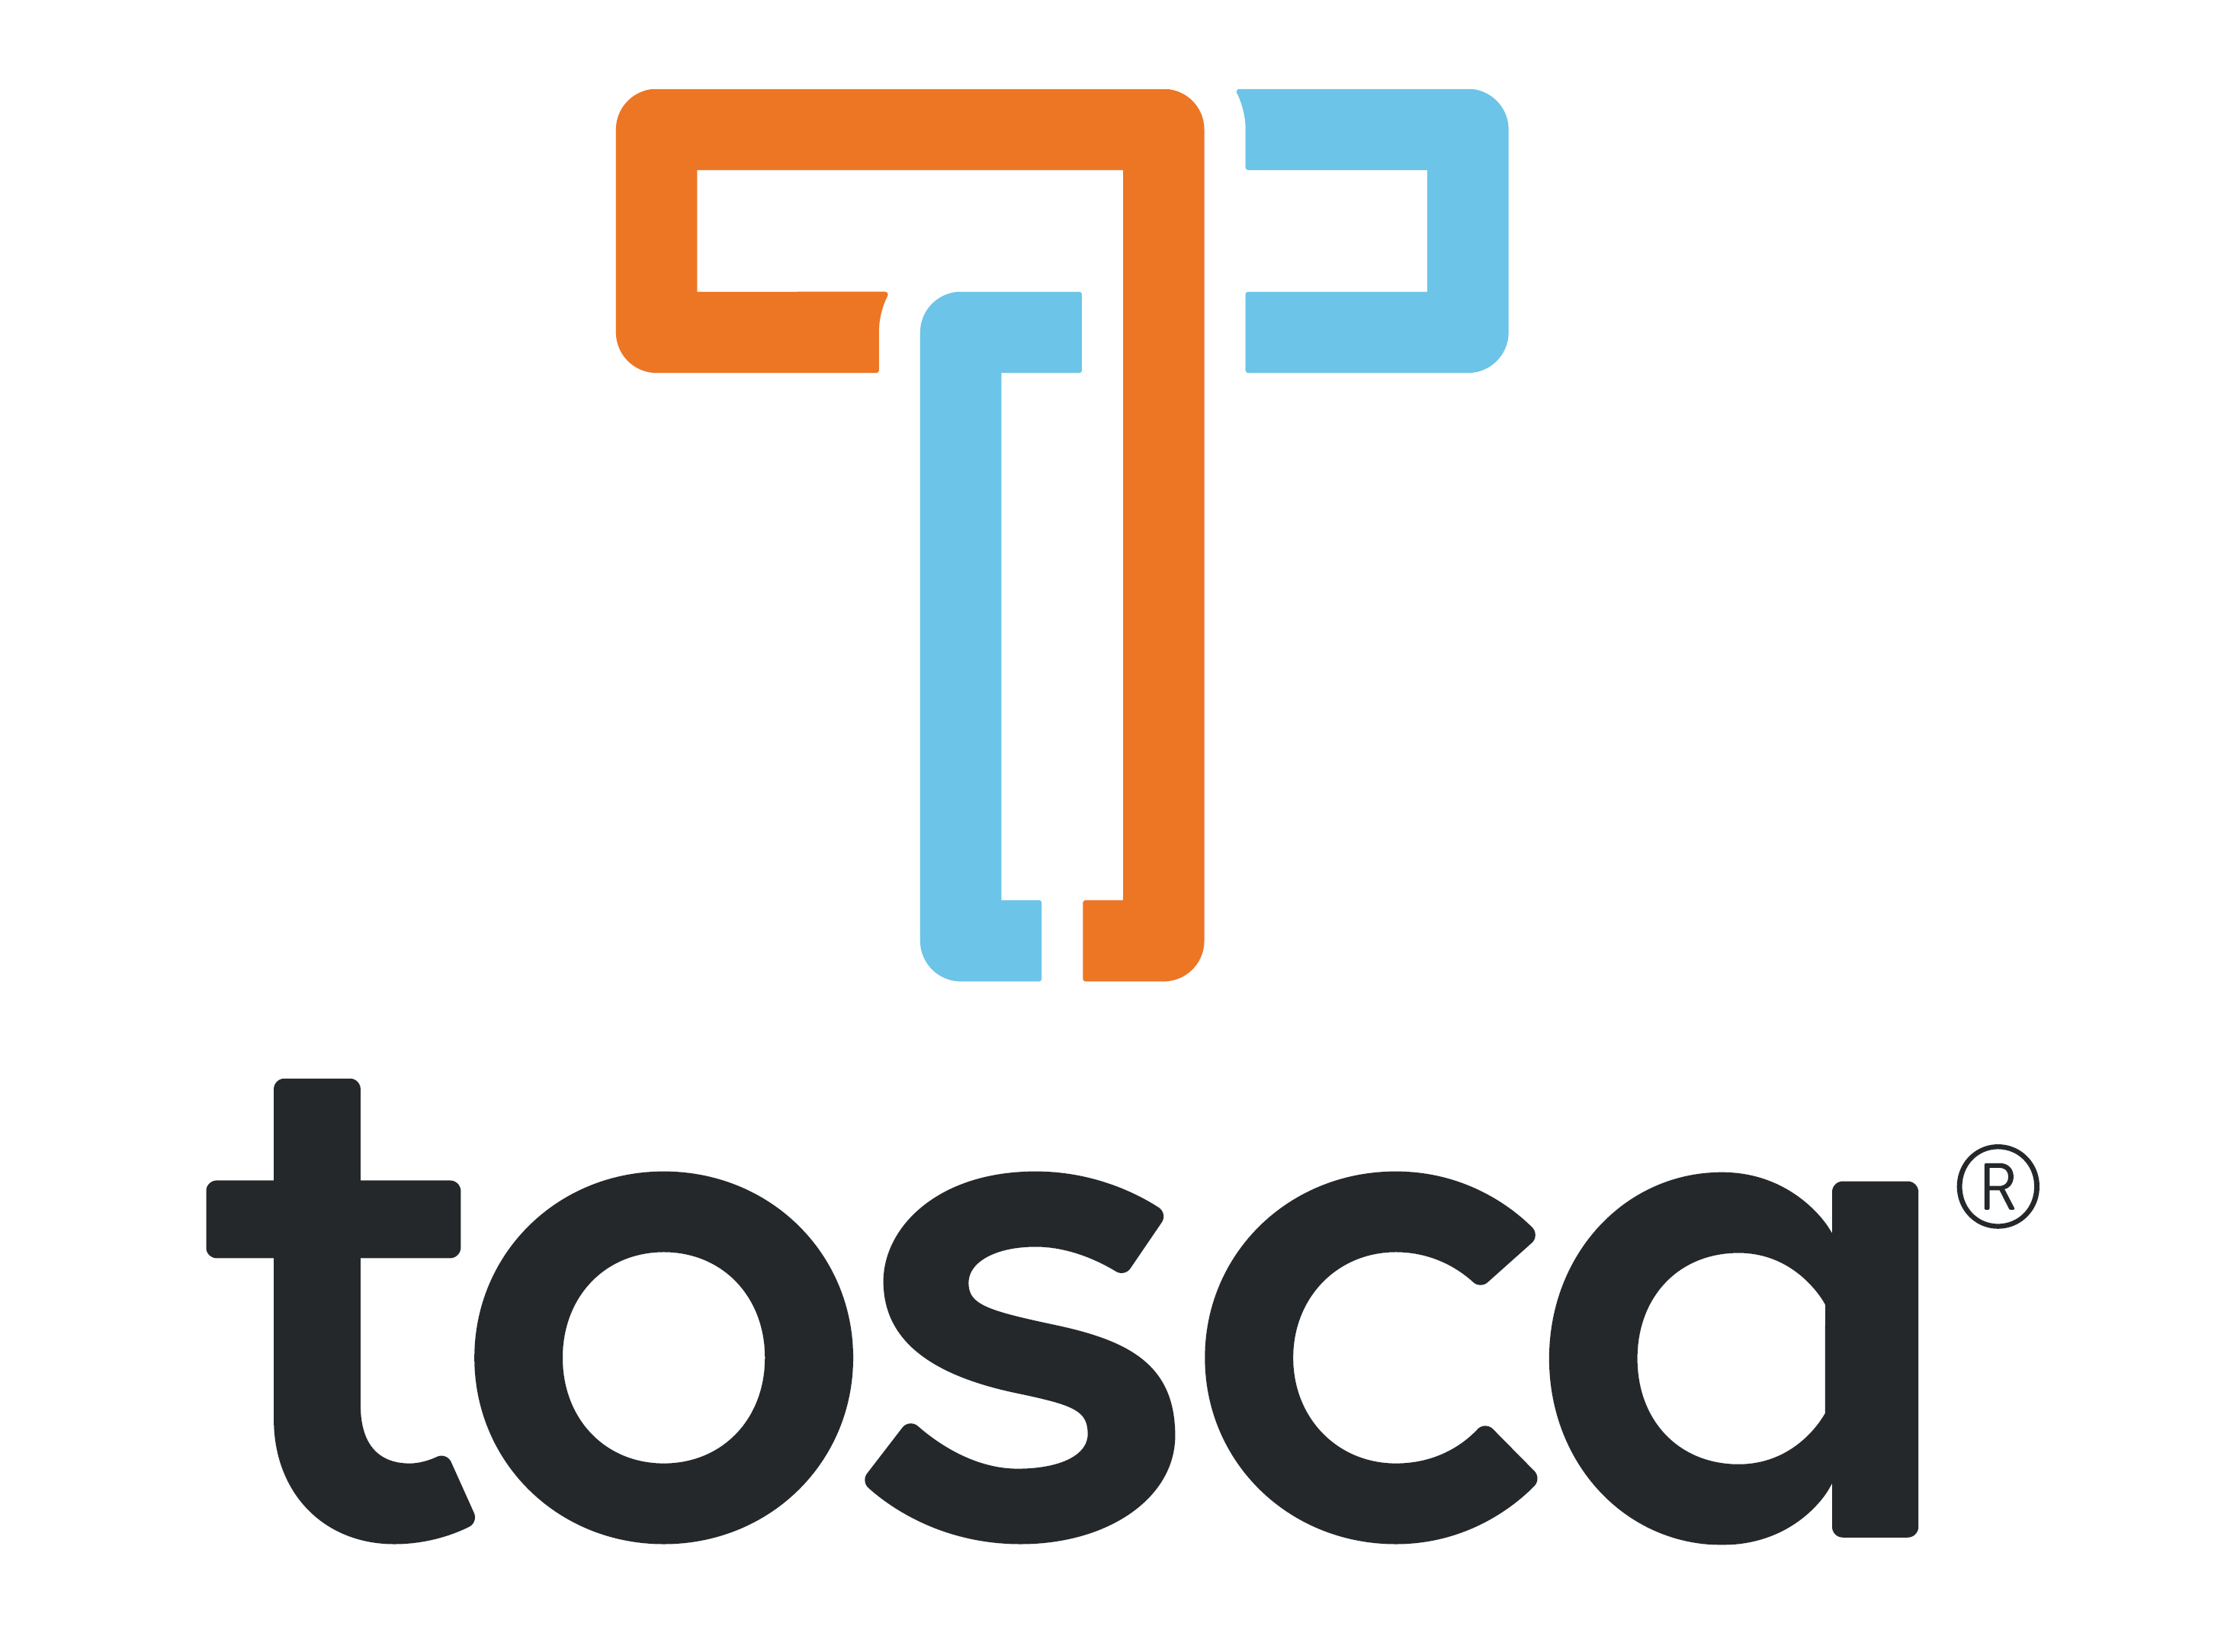 Tosca Services